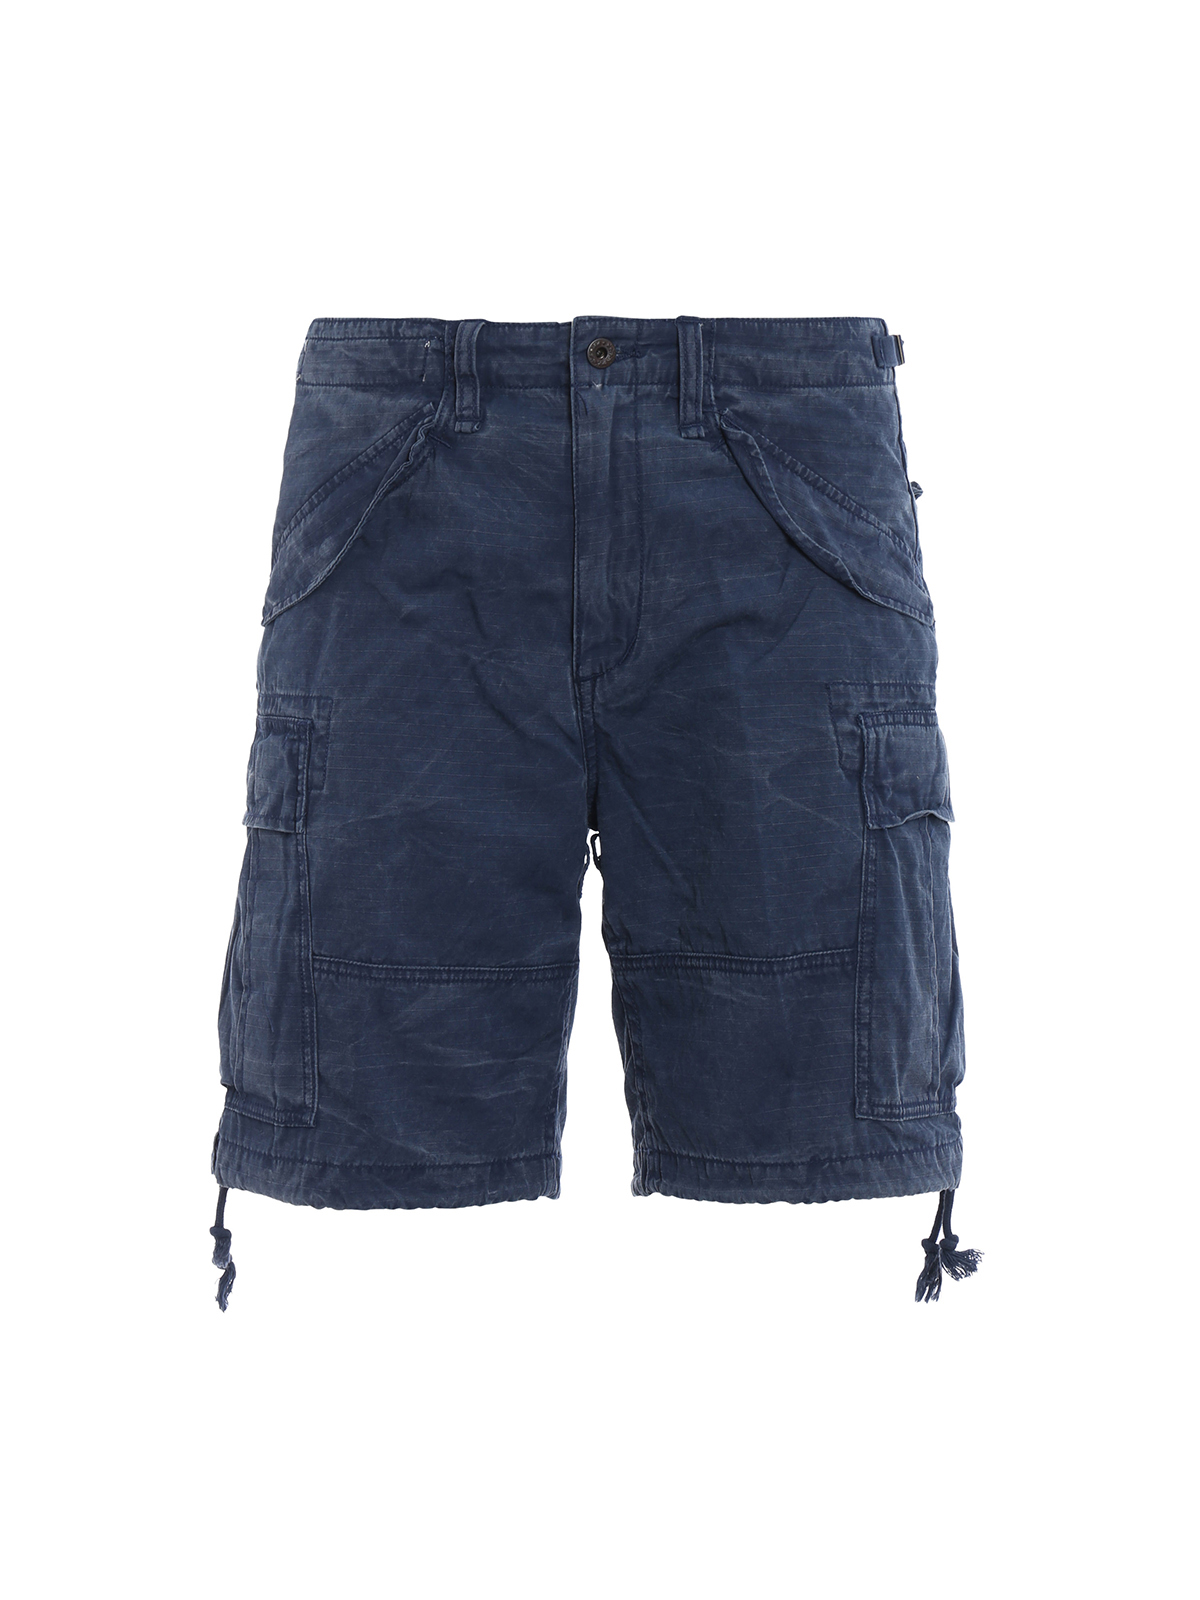 Trousers Shorts Polo Ralph Lauren - Classic Fit cargo short pants -  710644977007